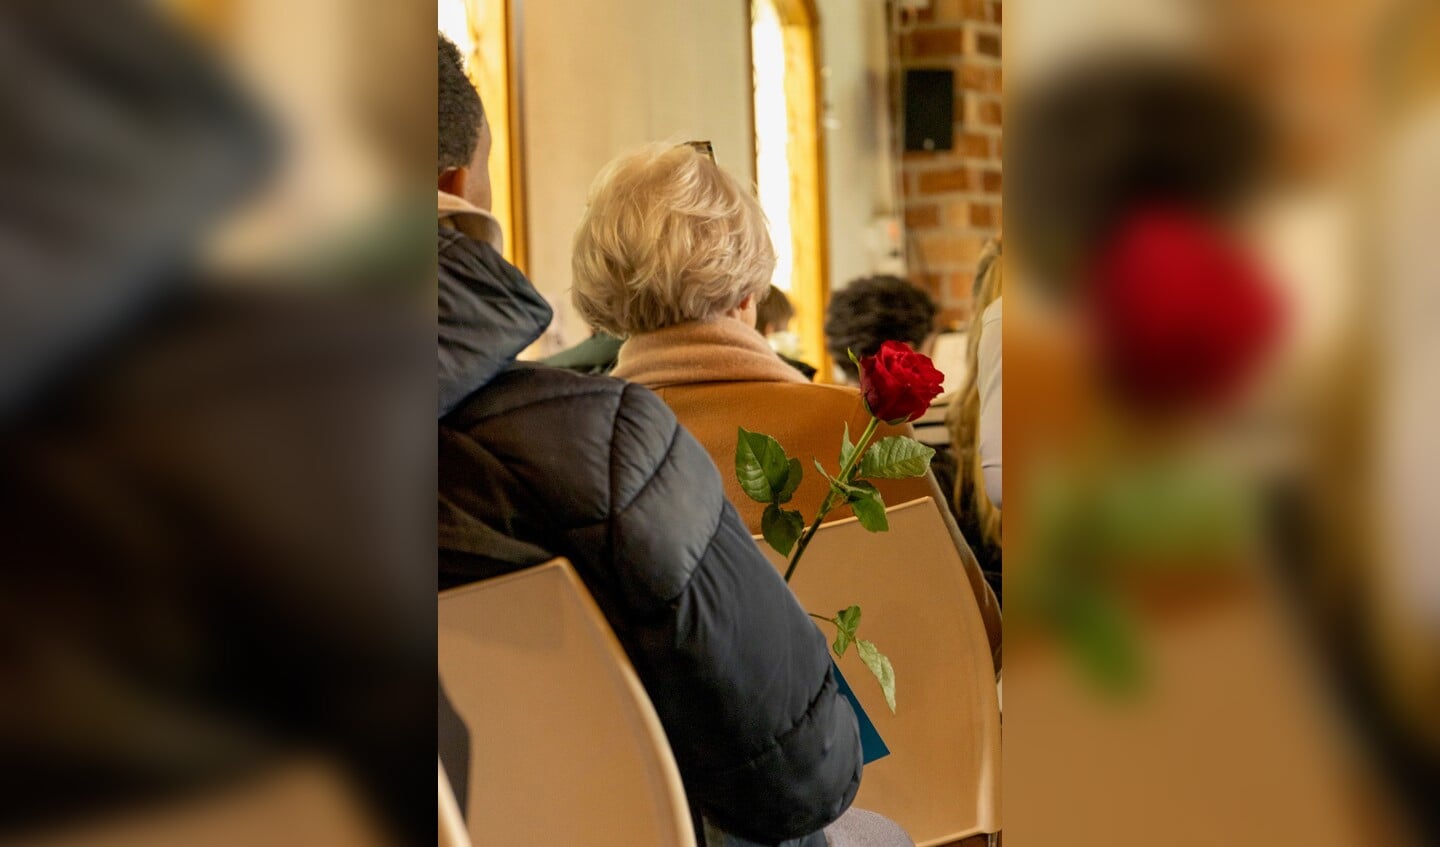 Leerling met roos in de kapel. Foto: Achterhoekfoto.nl / Annette van Bracht